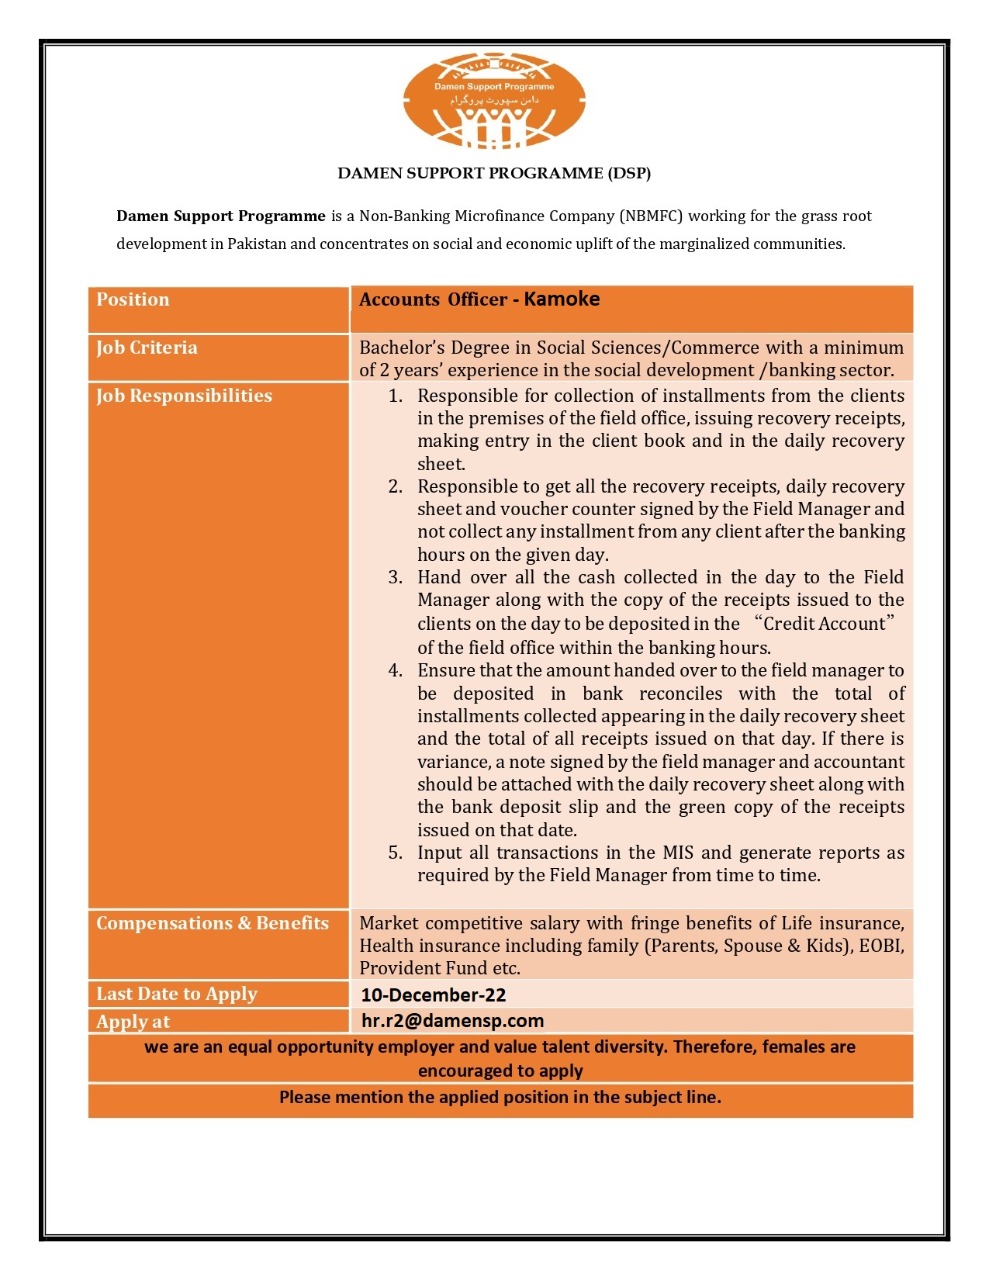 Damen Support Programme- دامن سپورٹ پروگرام (DSP) Jobs 2022